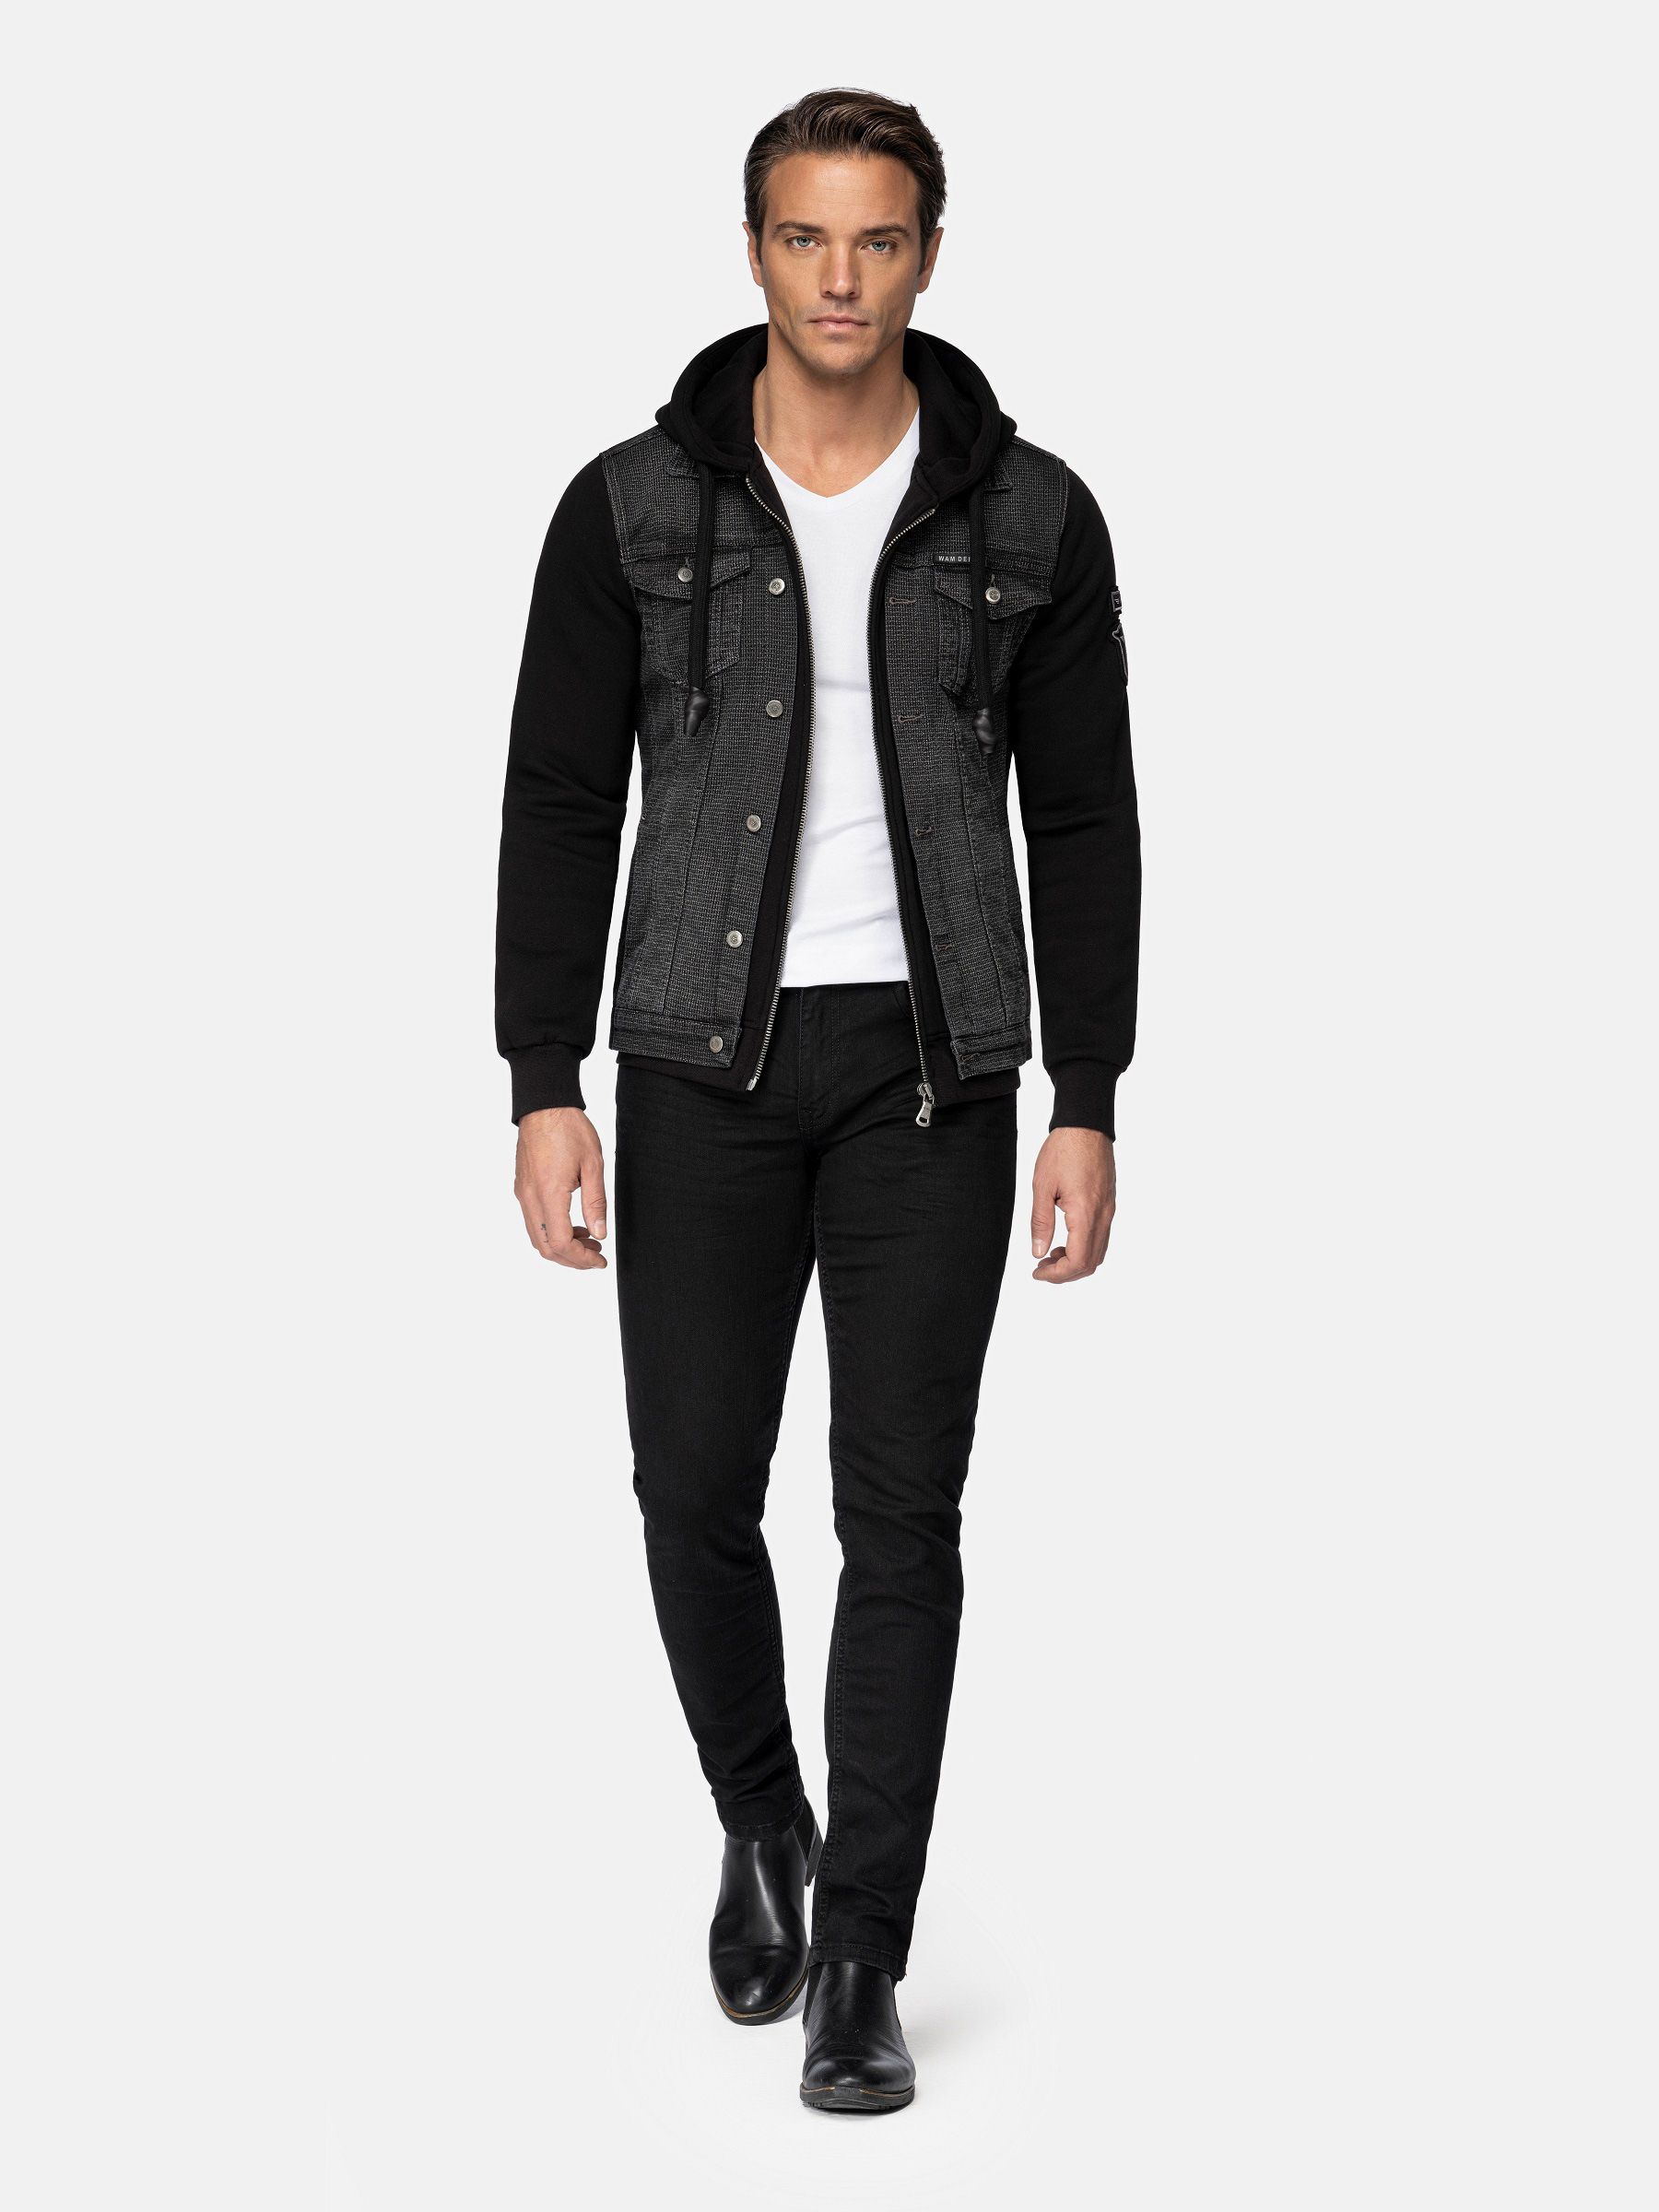 Calvin Klein Jeans Black Denim Jacket Mens SIze... - Depop